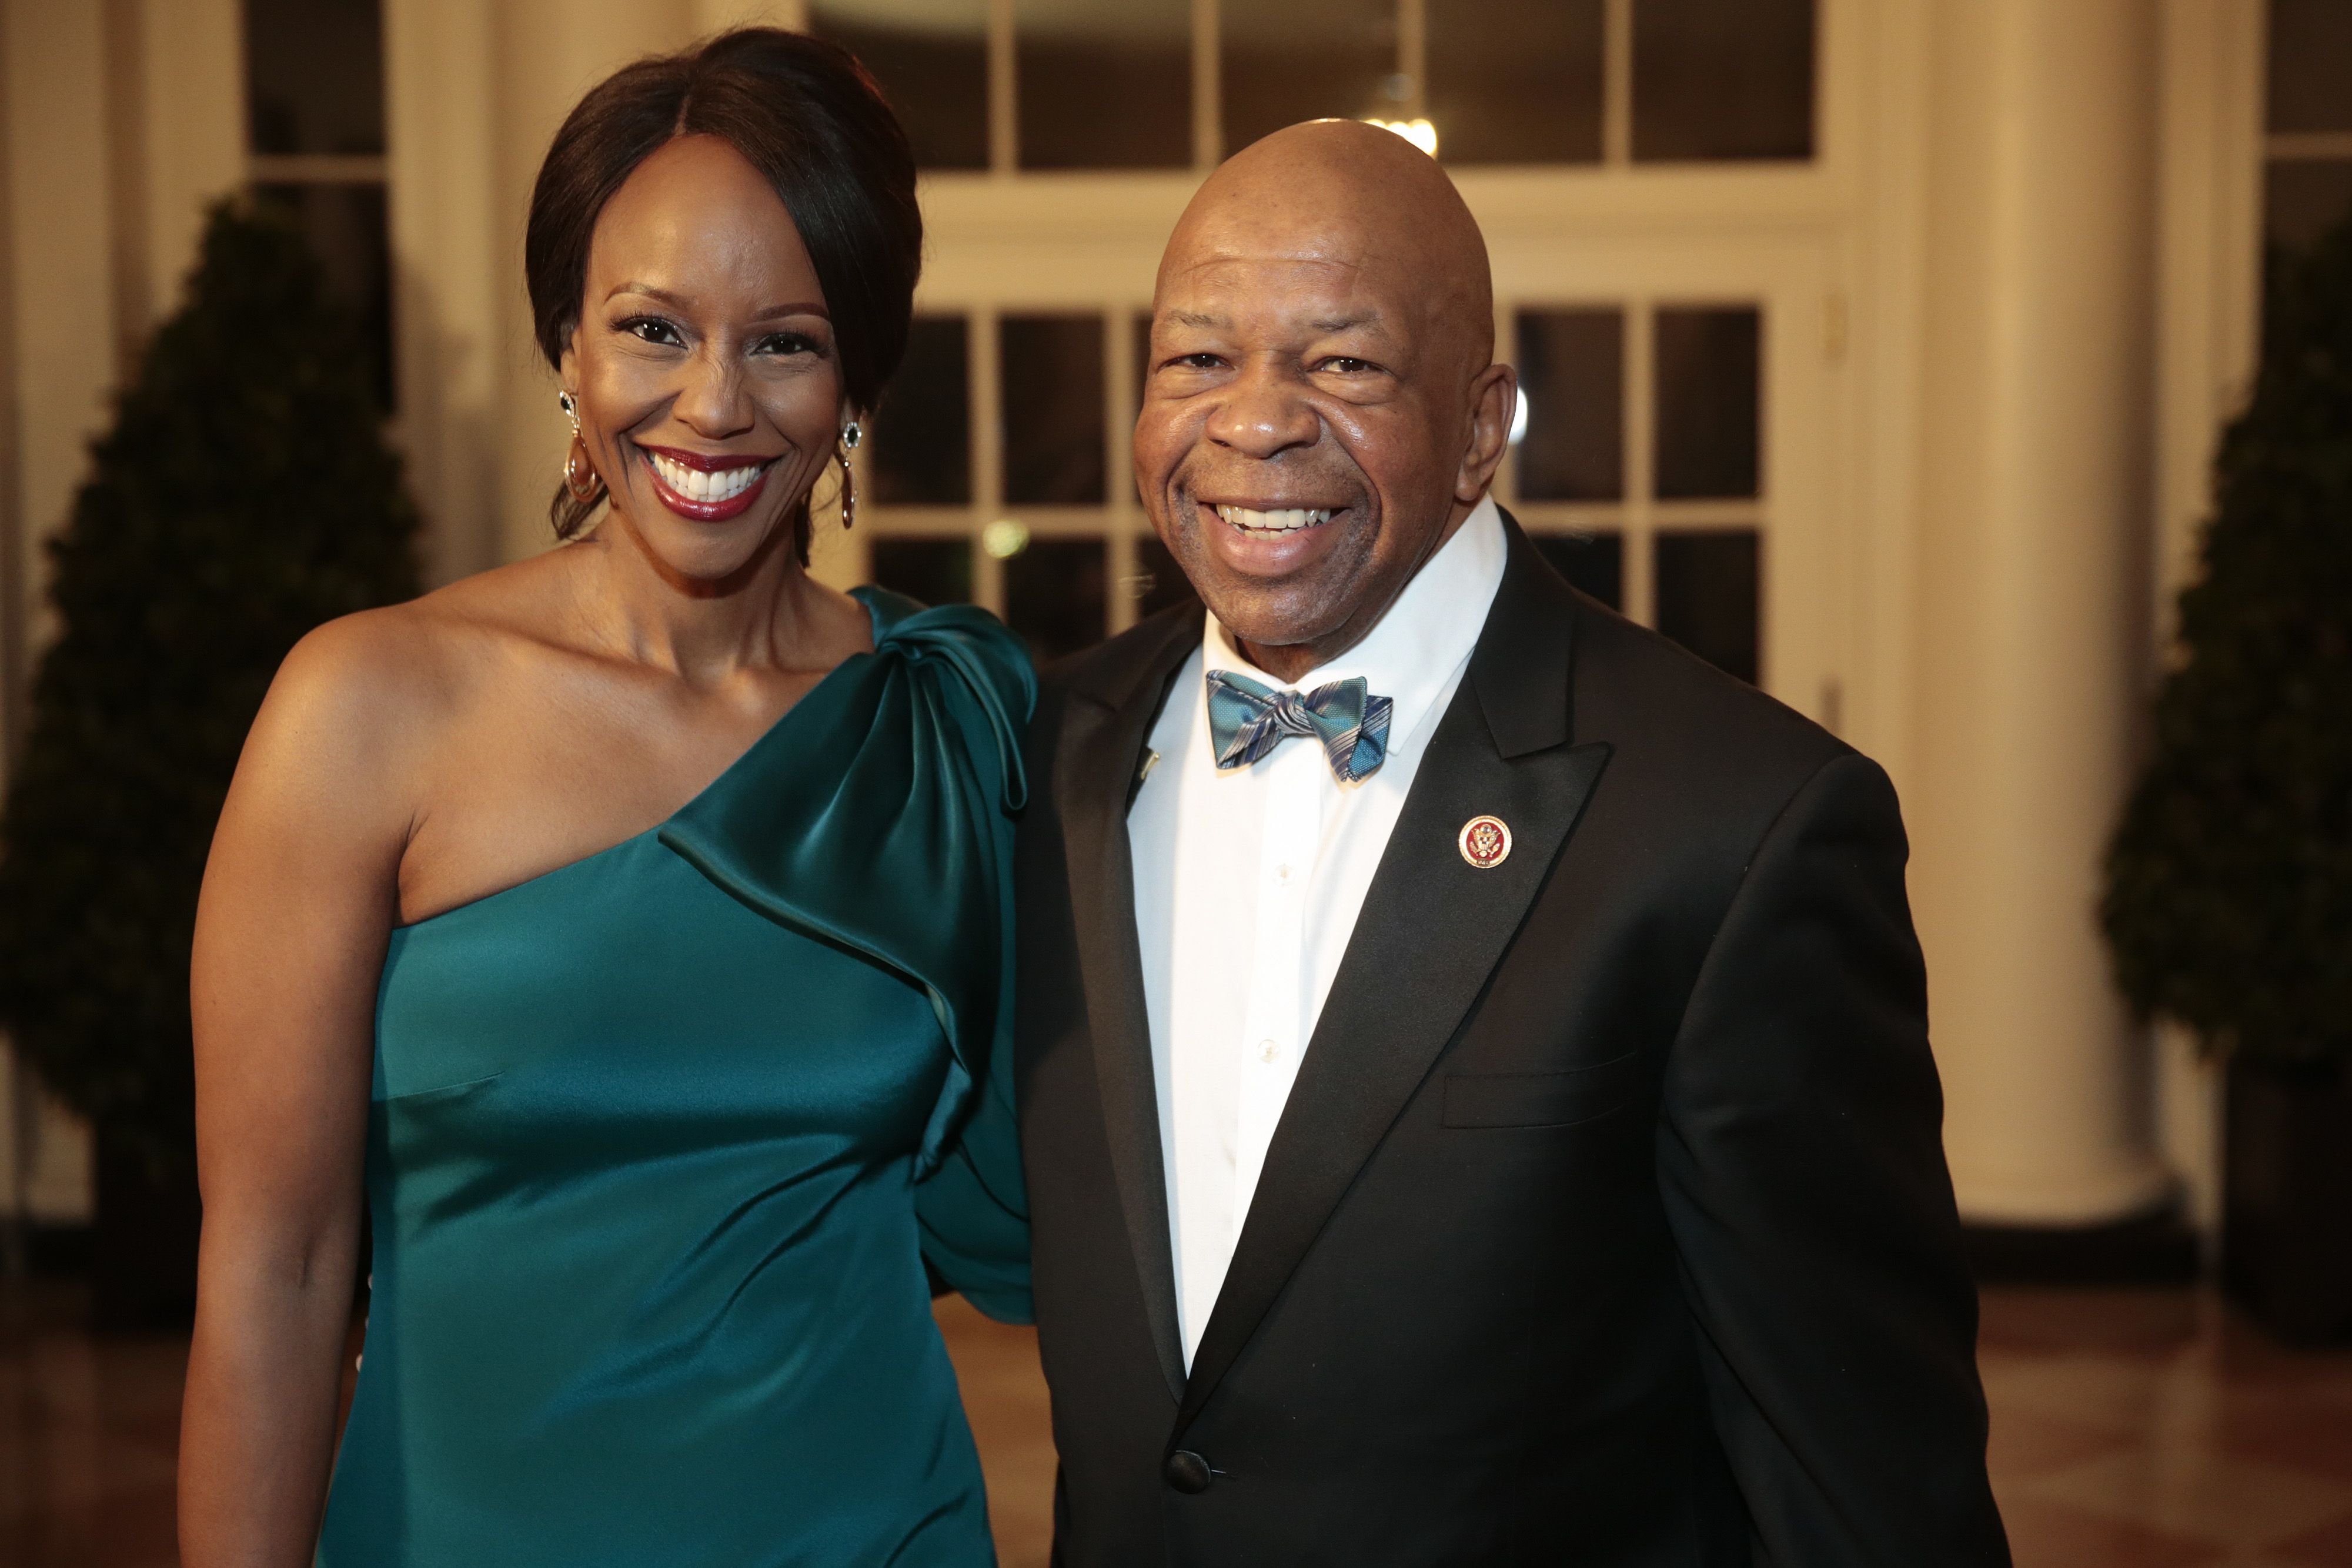 Cummings with Maya Rockeymoore Cummings, his wife, at the White House in 2014.